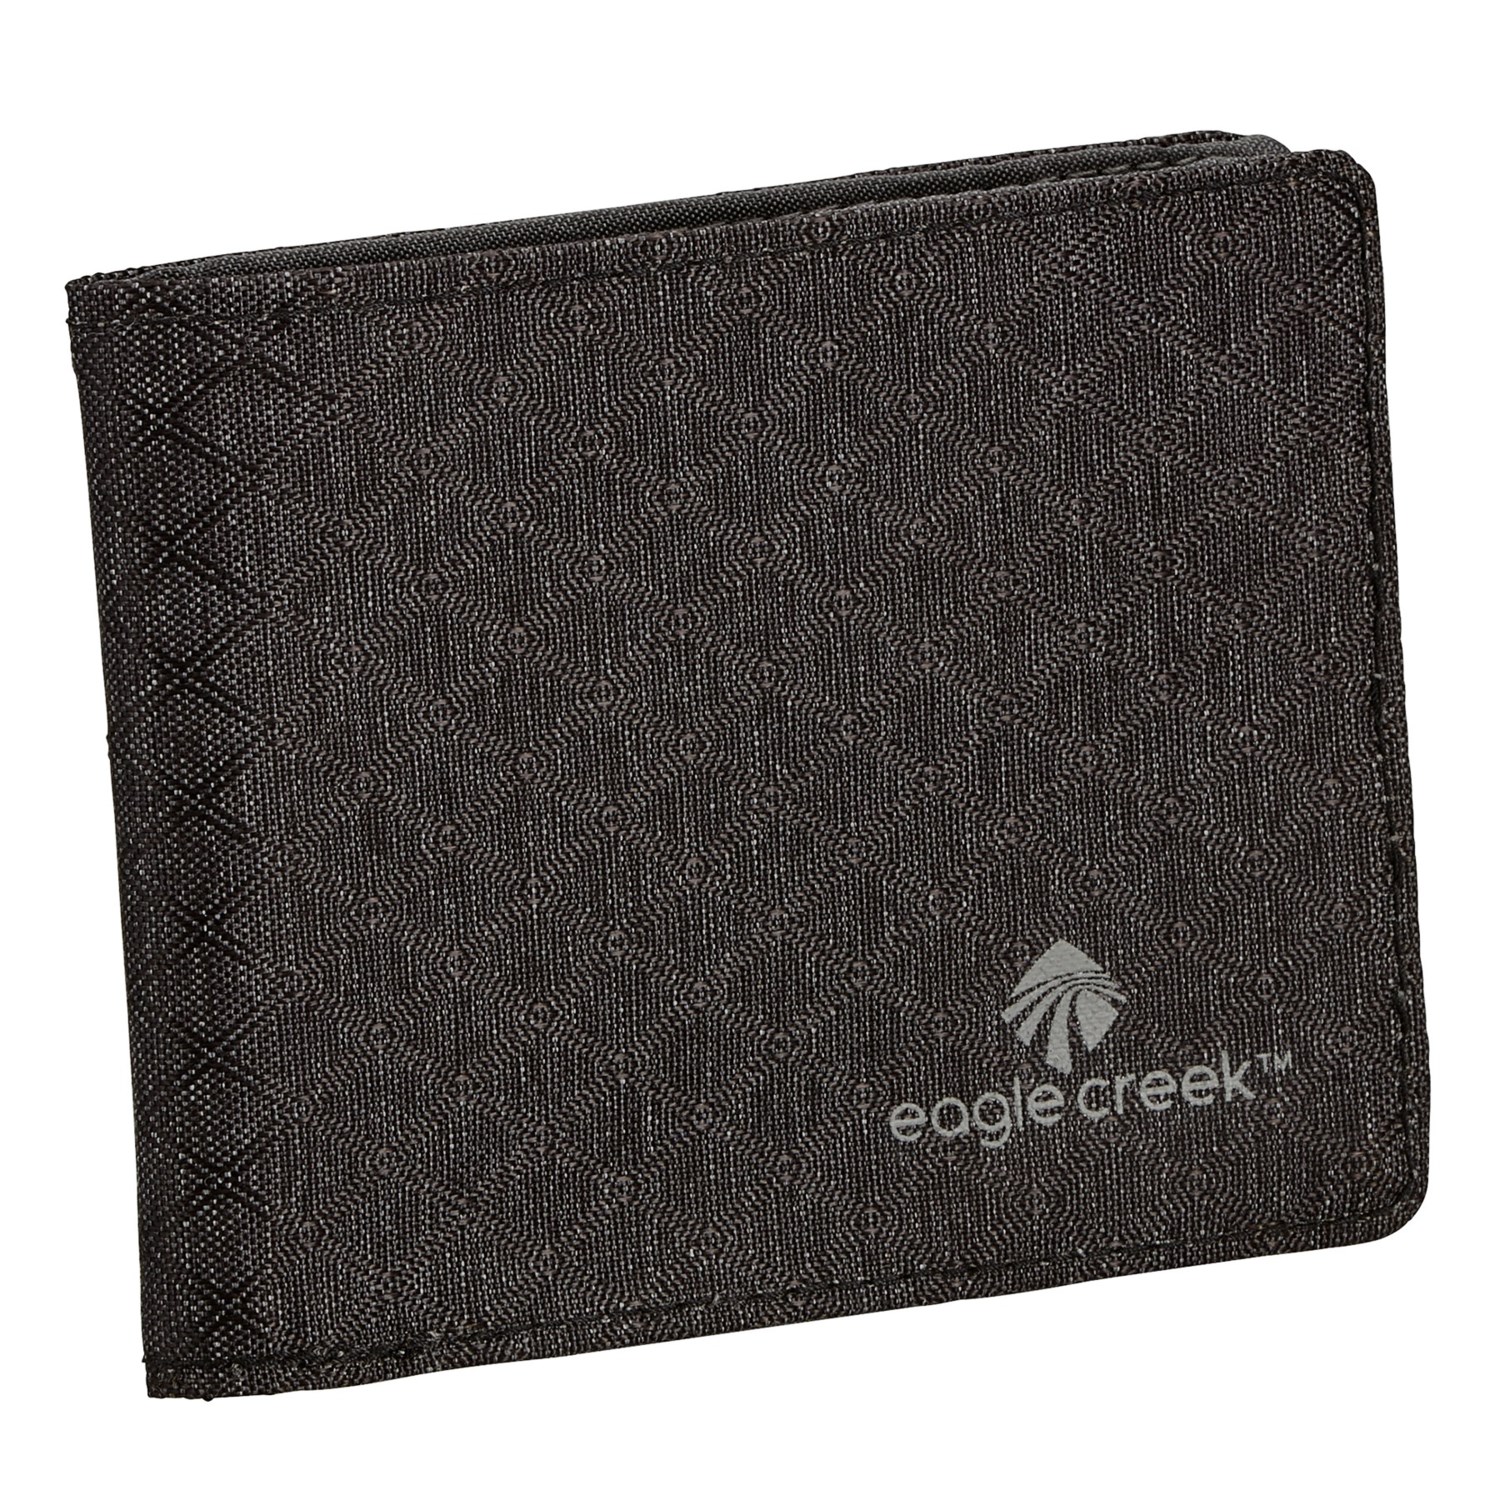 Eagle Creek RFID Bi-Fold Wallet